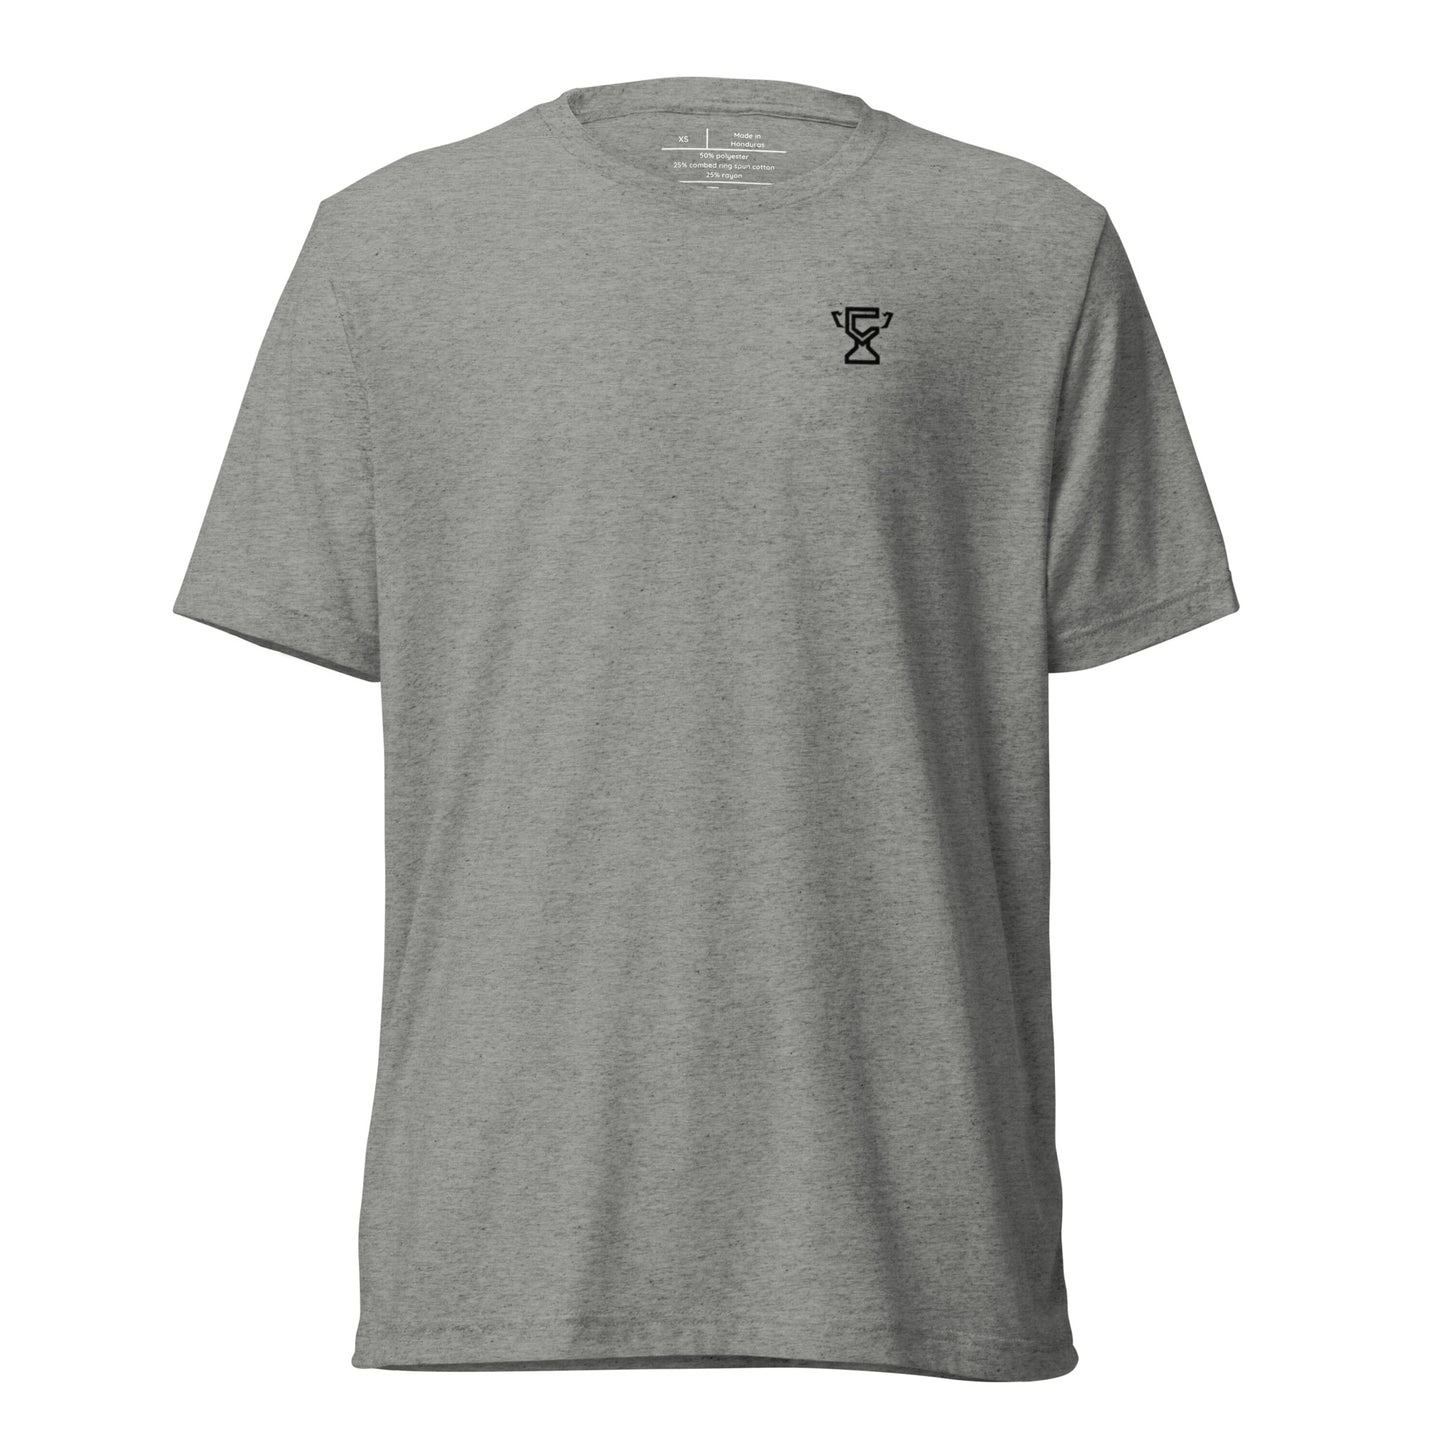 Gray Champletes ultra soft t-shirt.